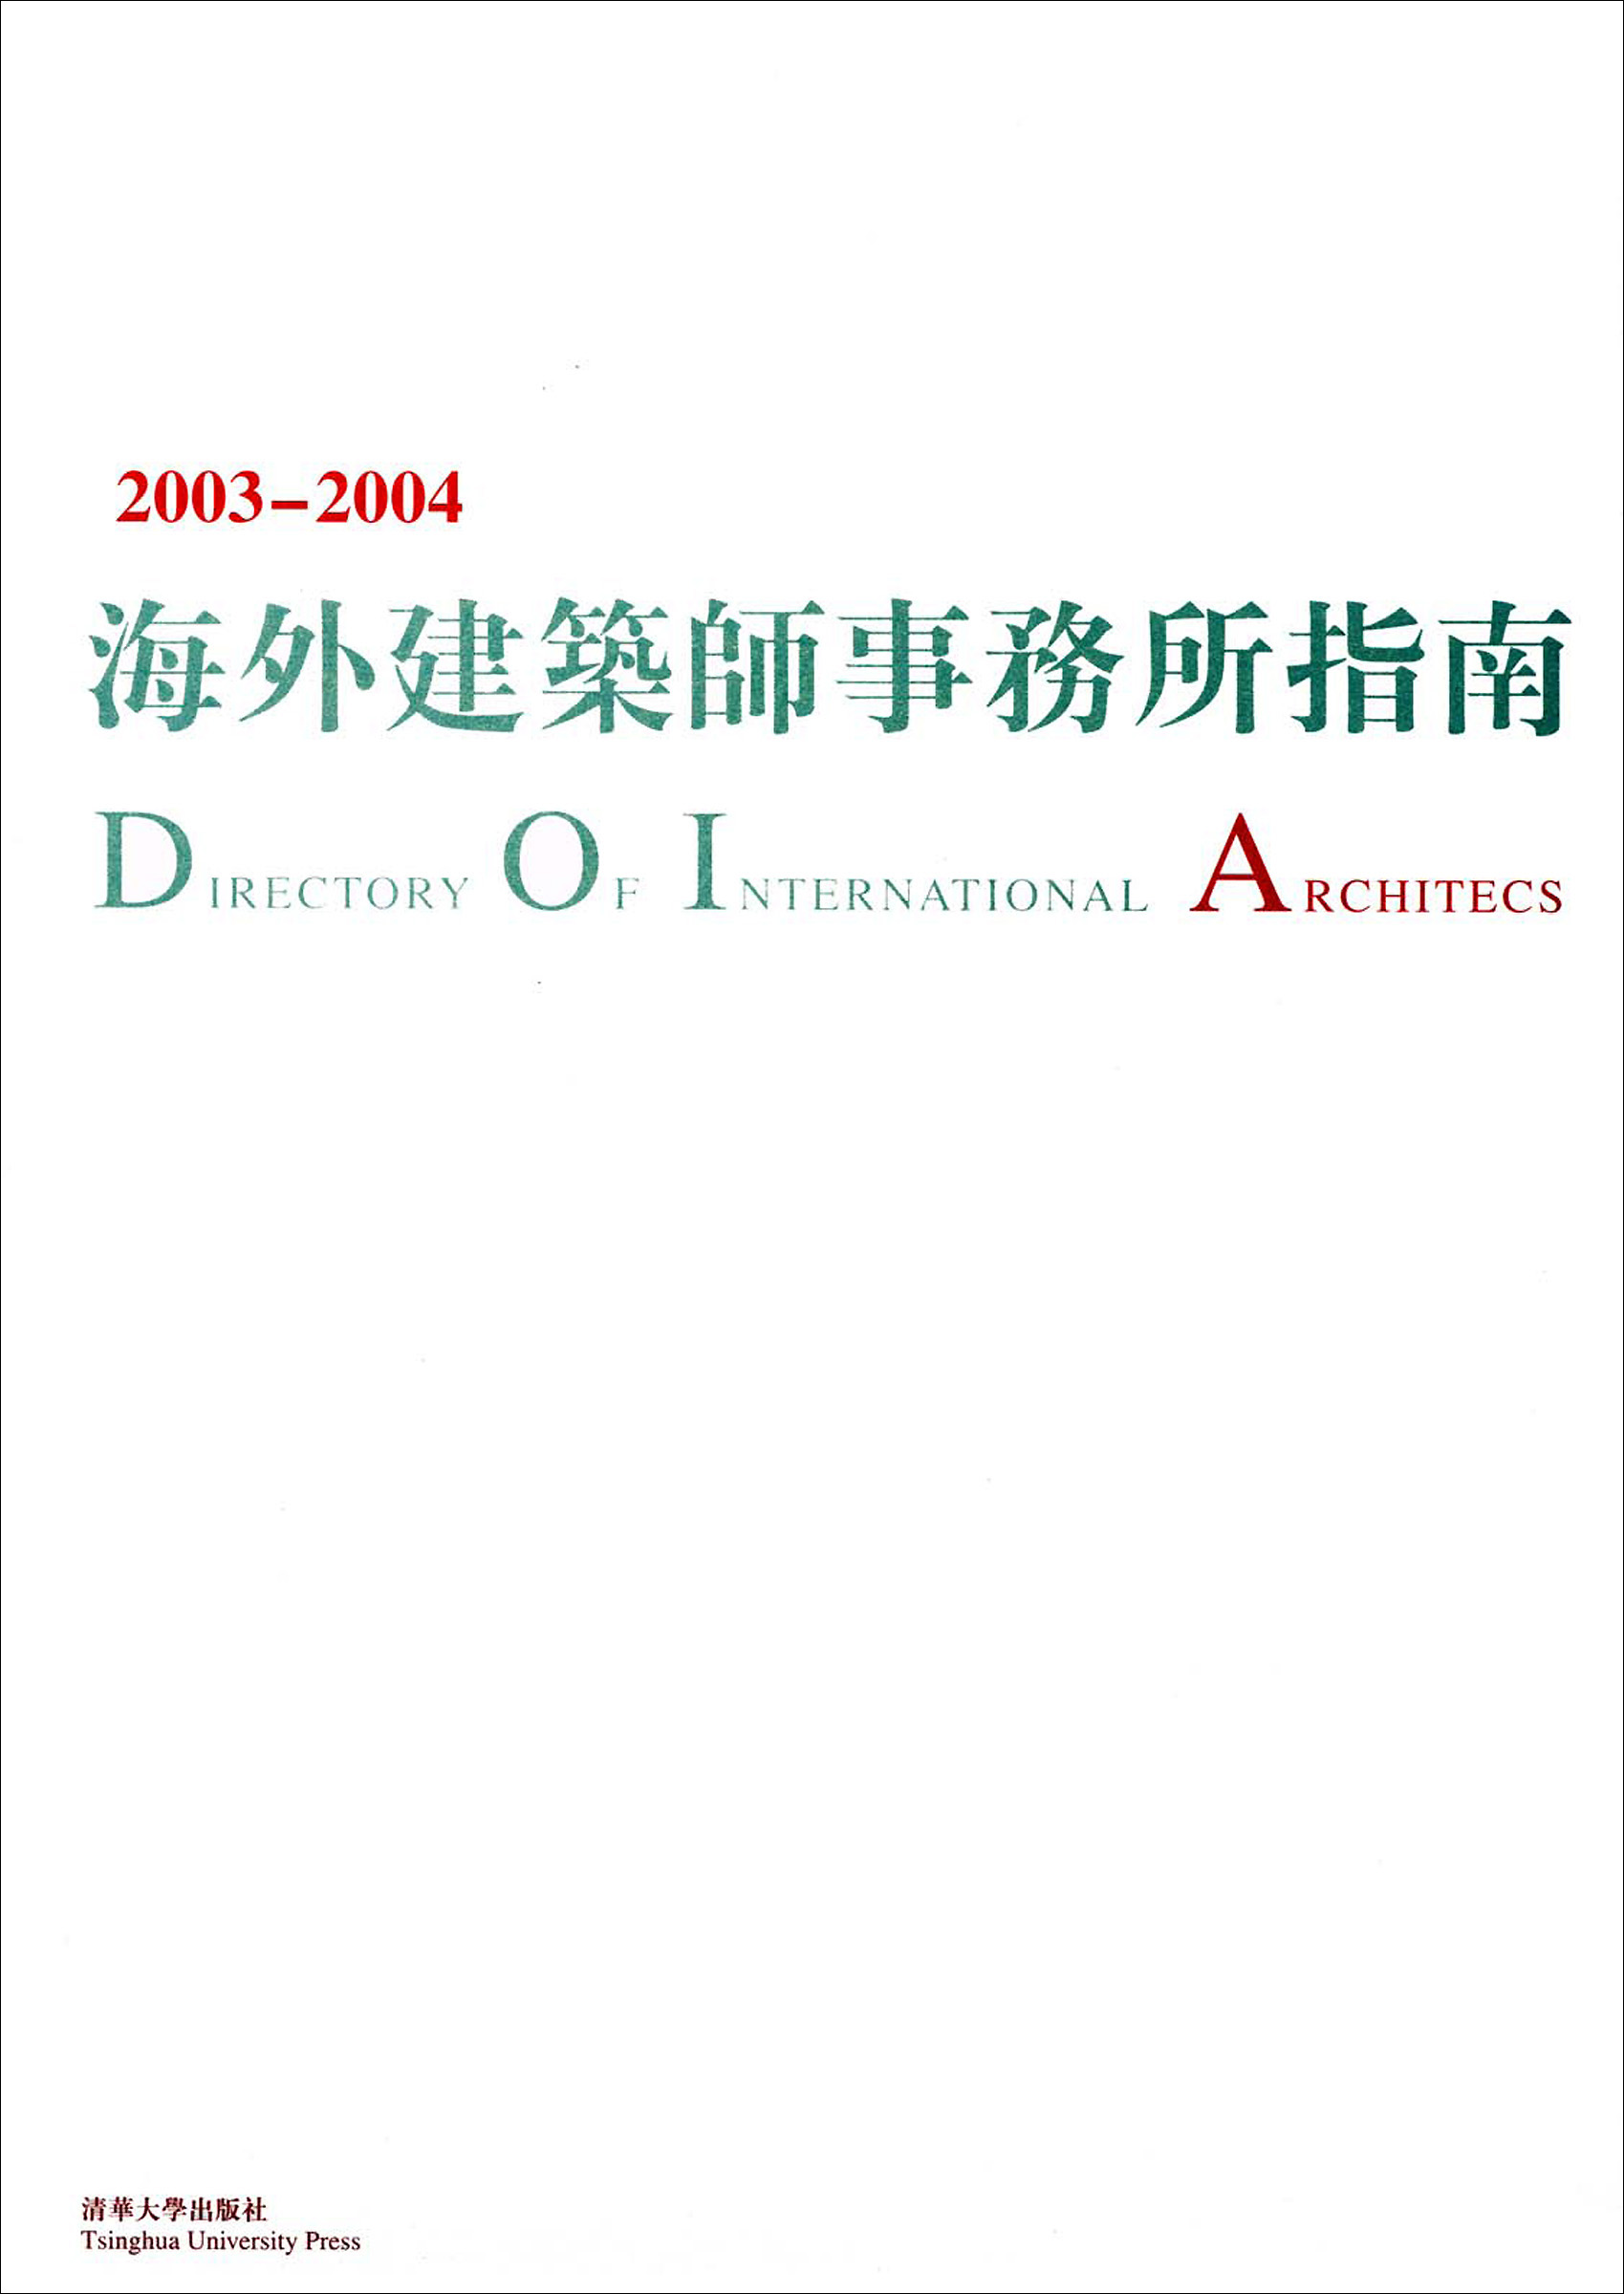 Directory of International Architects 2003-2004